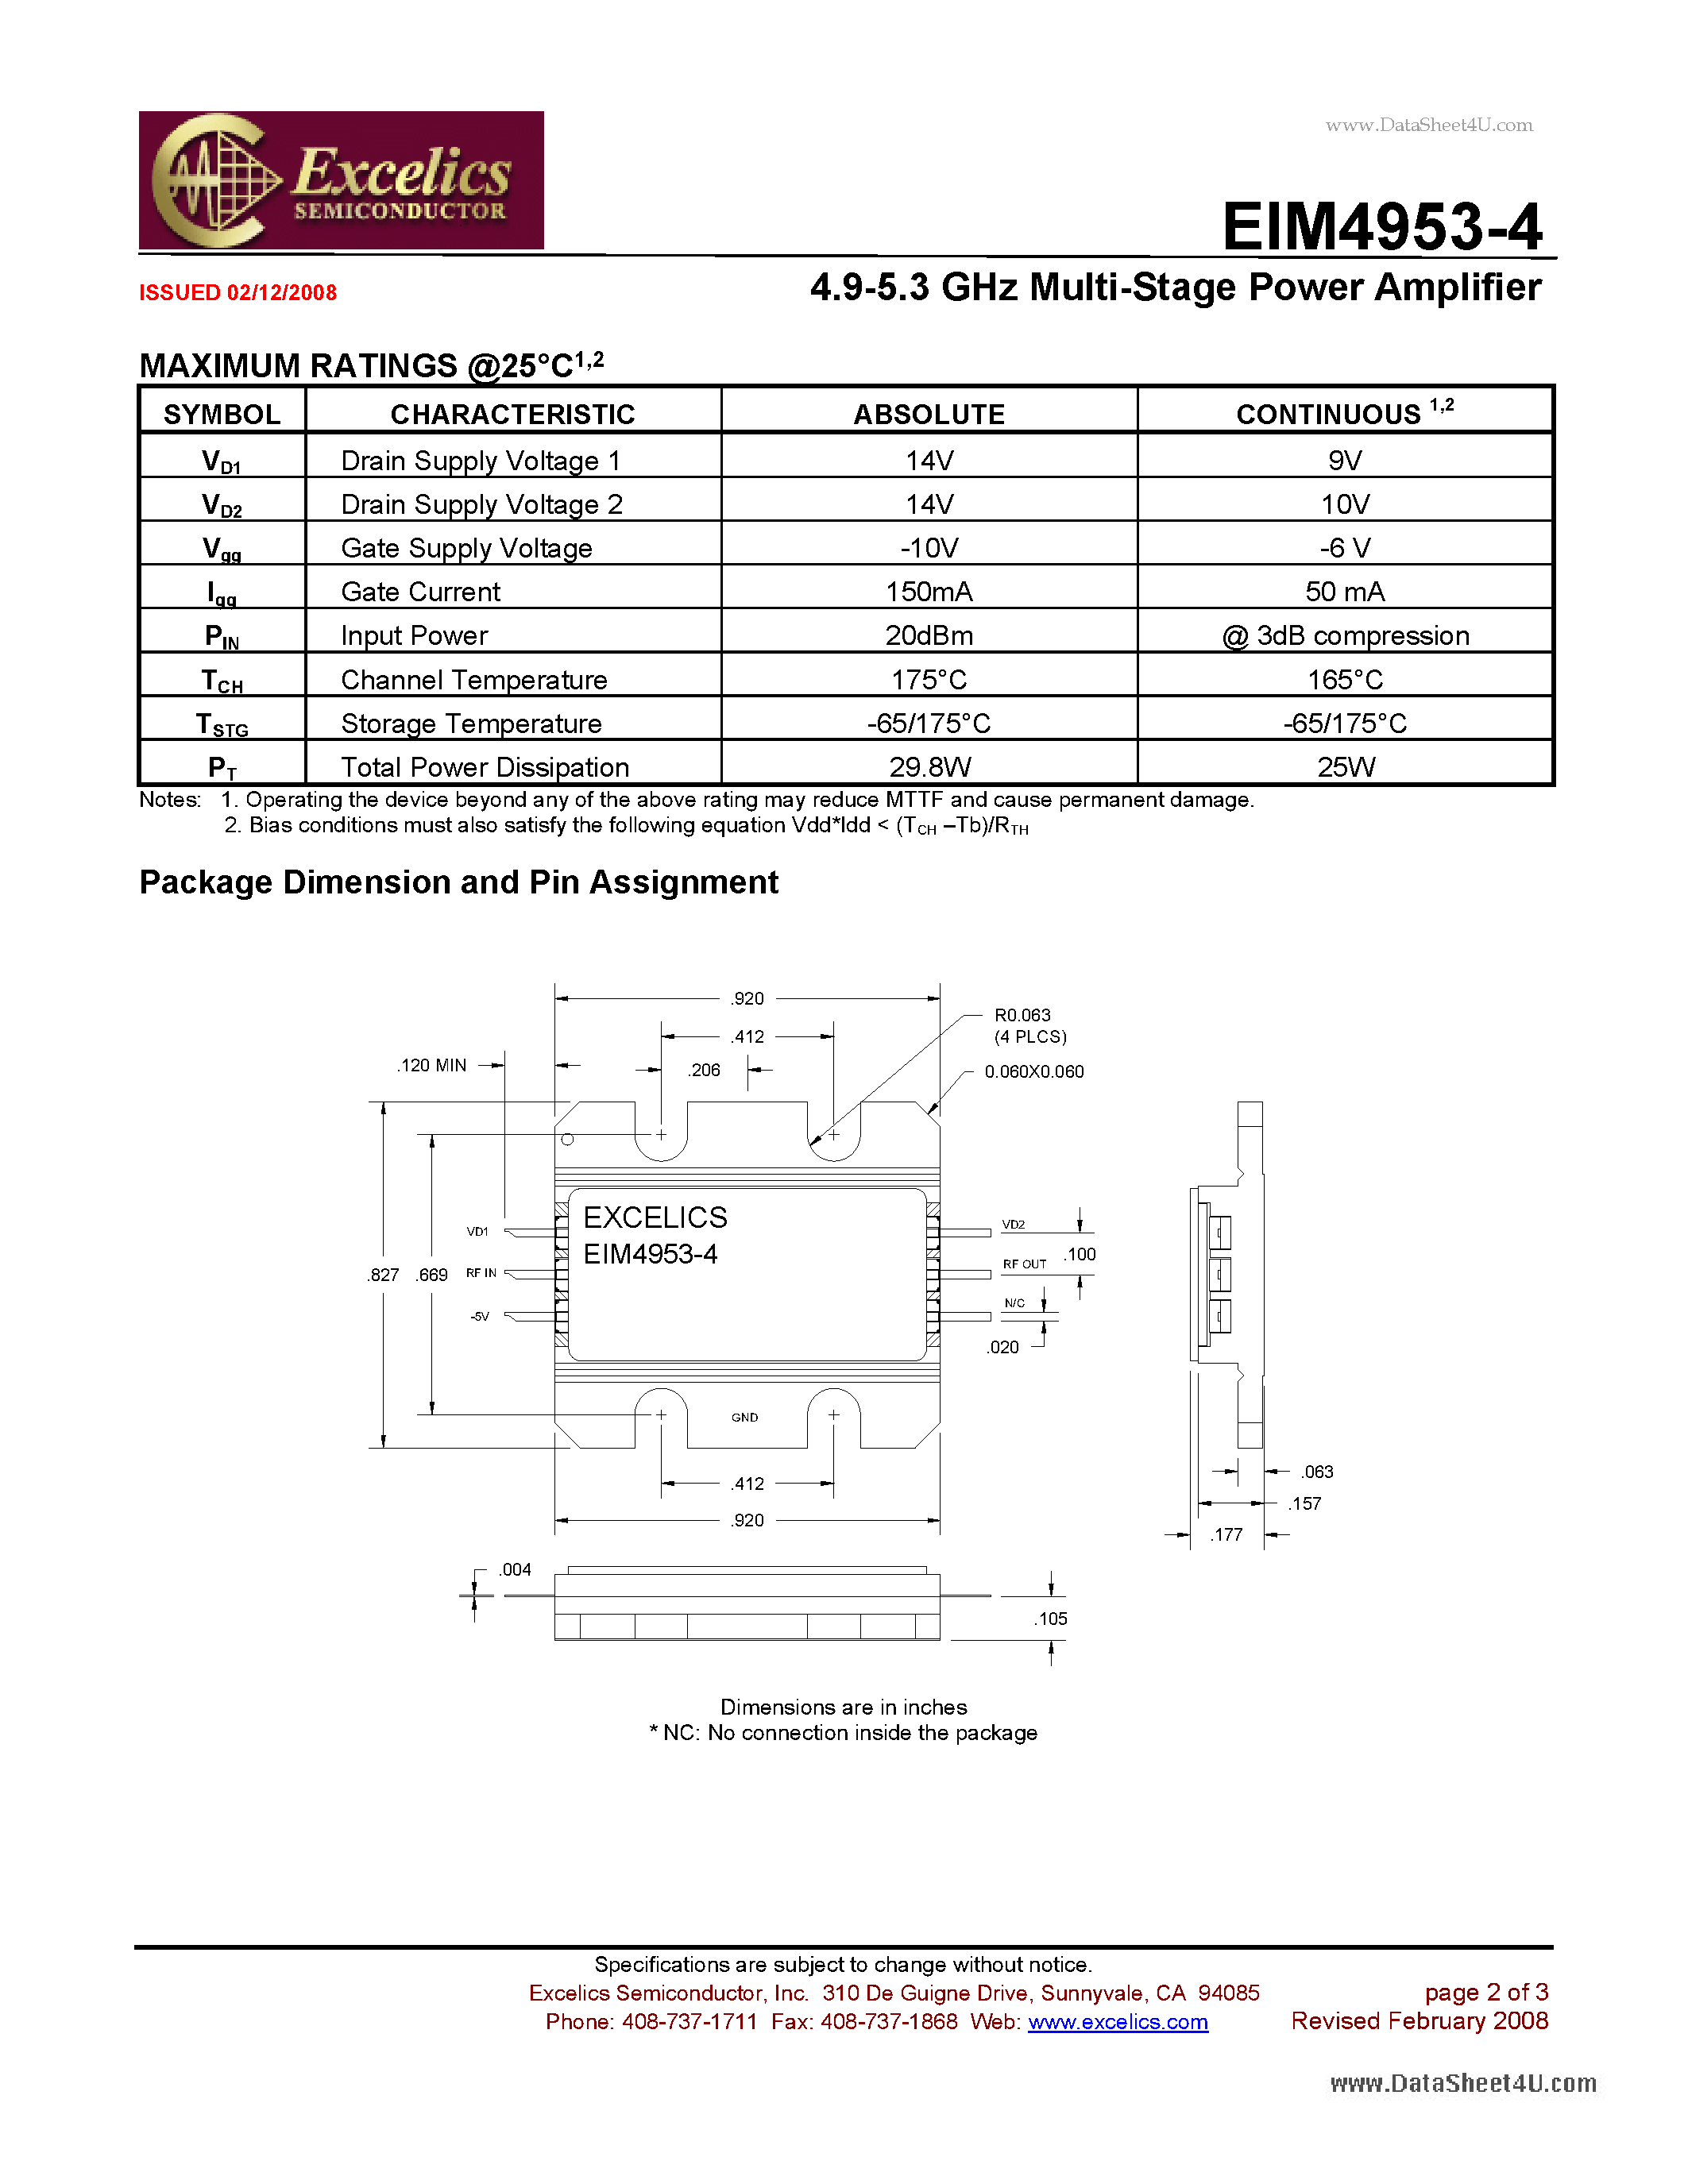 Даташит EIM4953-4 - 4.9-5.3 GHz Multi-Stage Power Amplifier страница 2